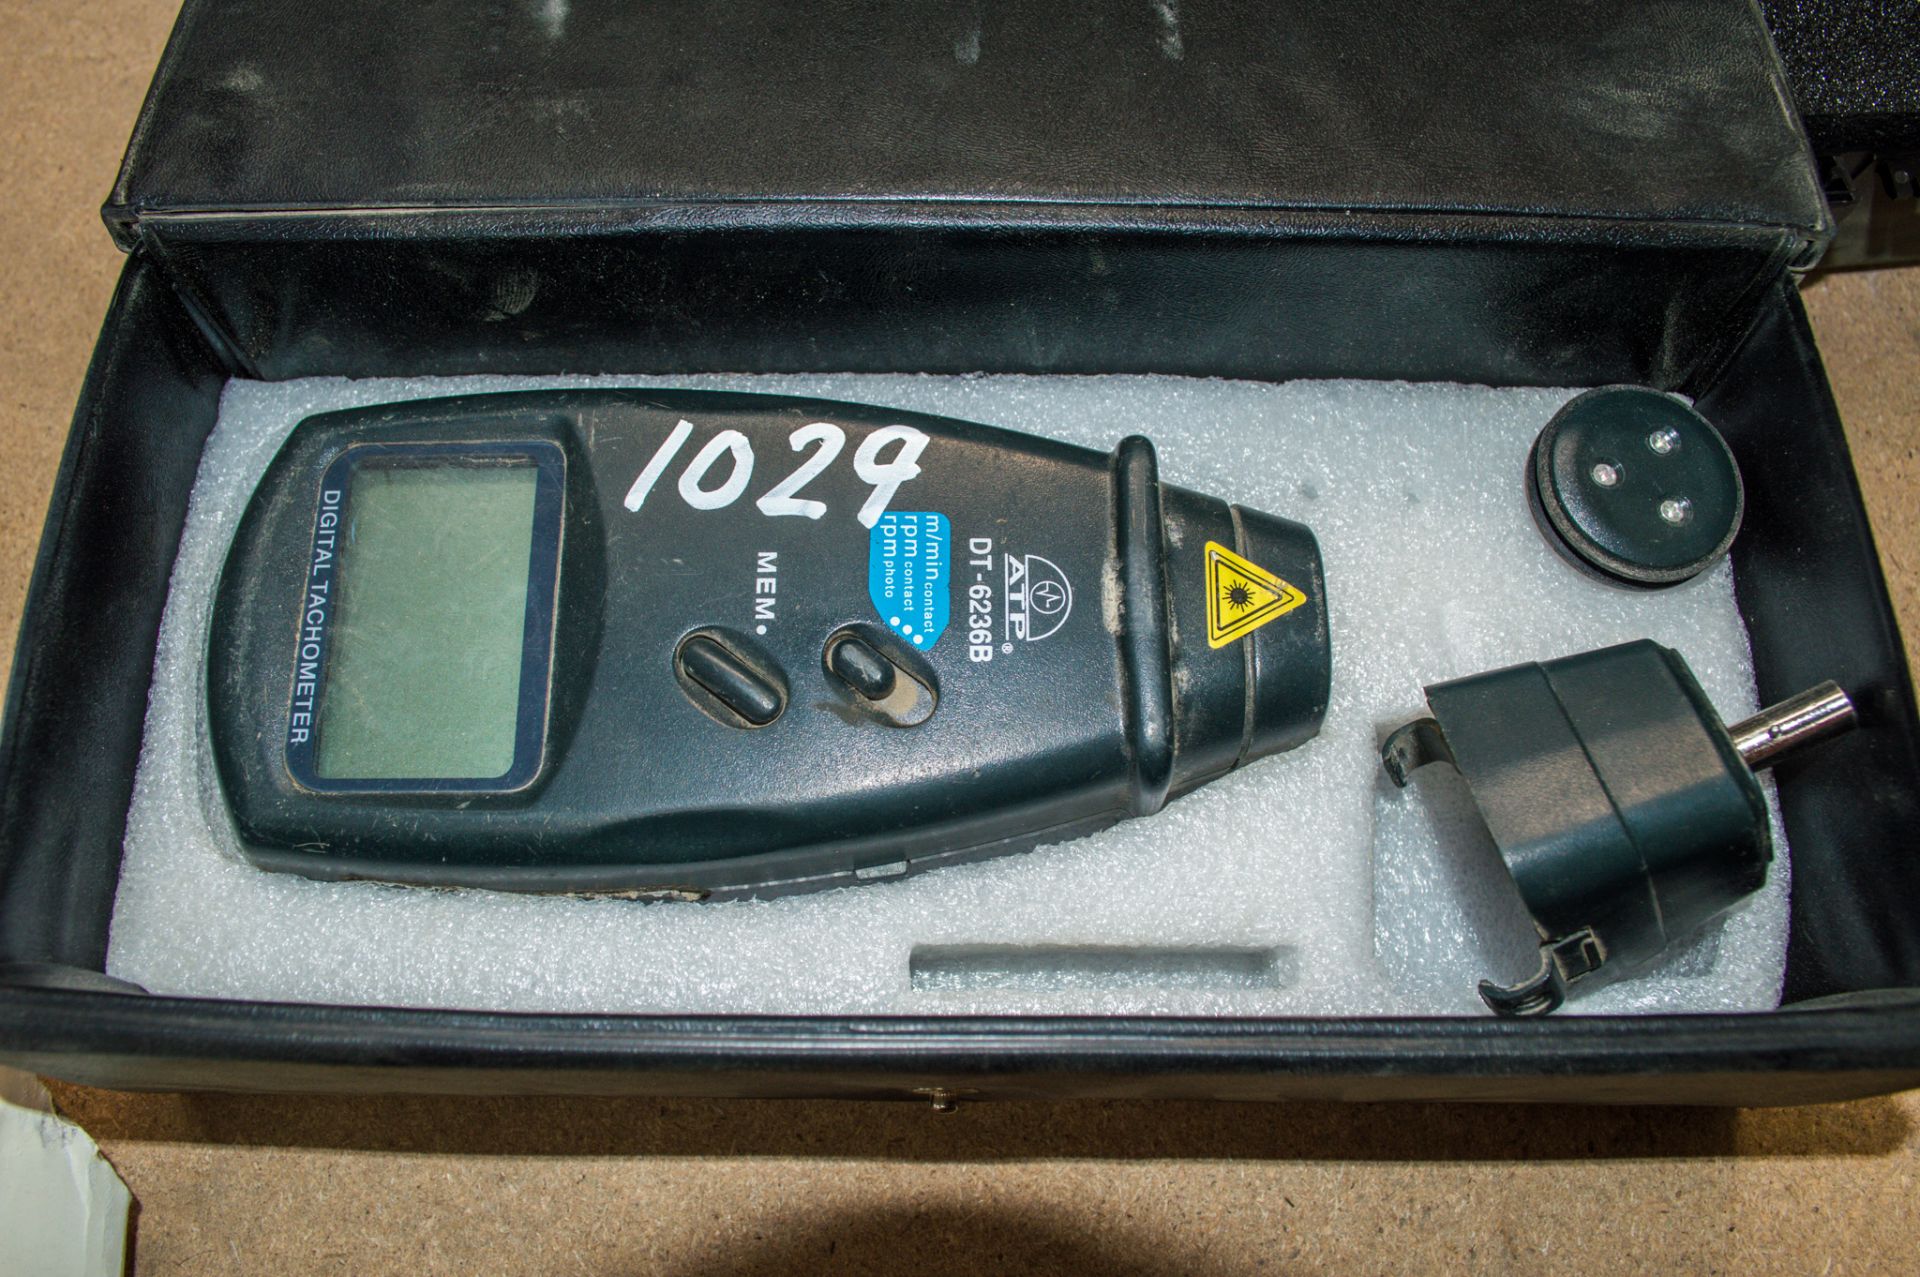 ATP DT-6236B digital tachometer c/w carry case